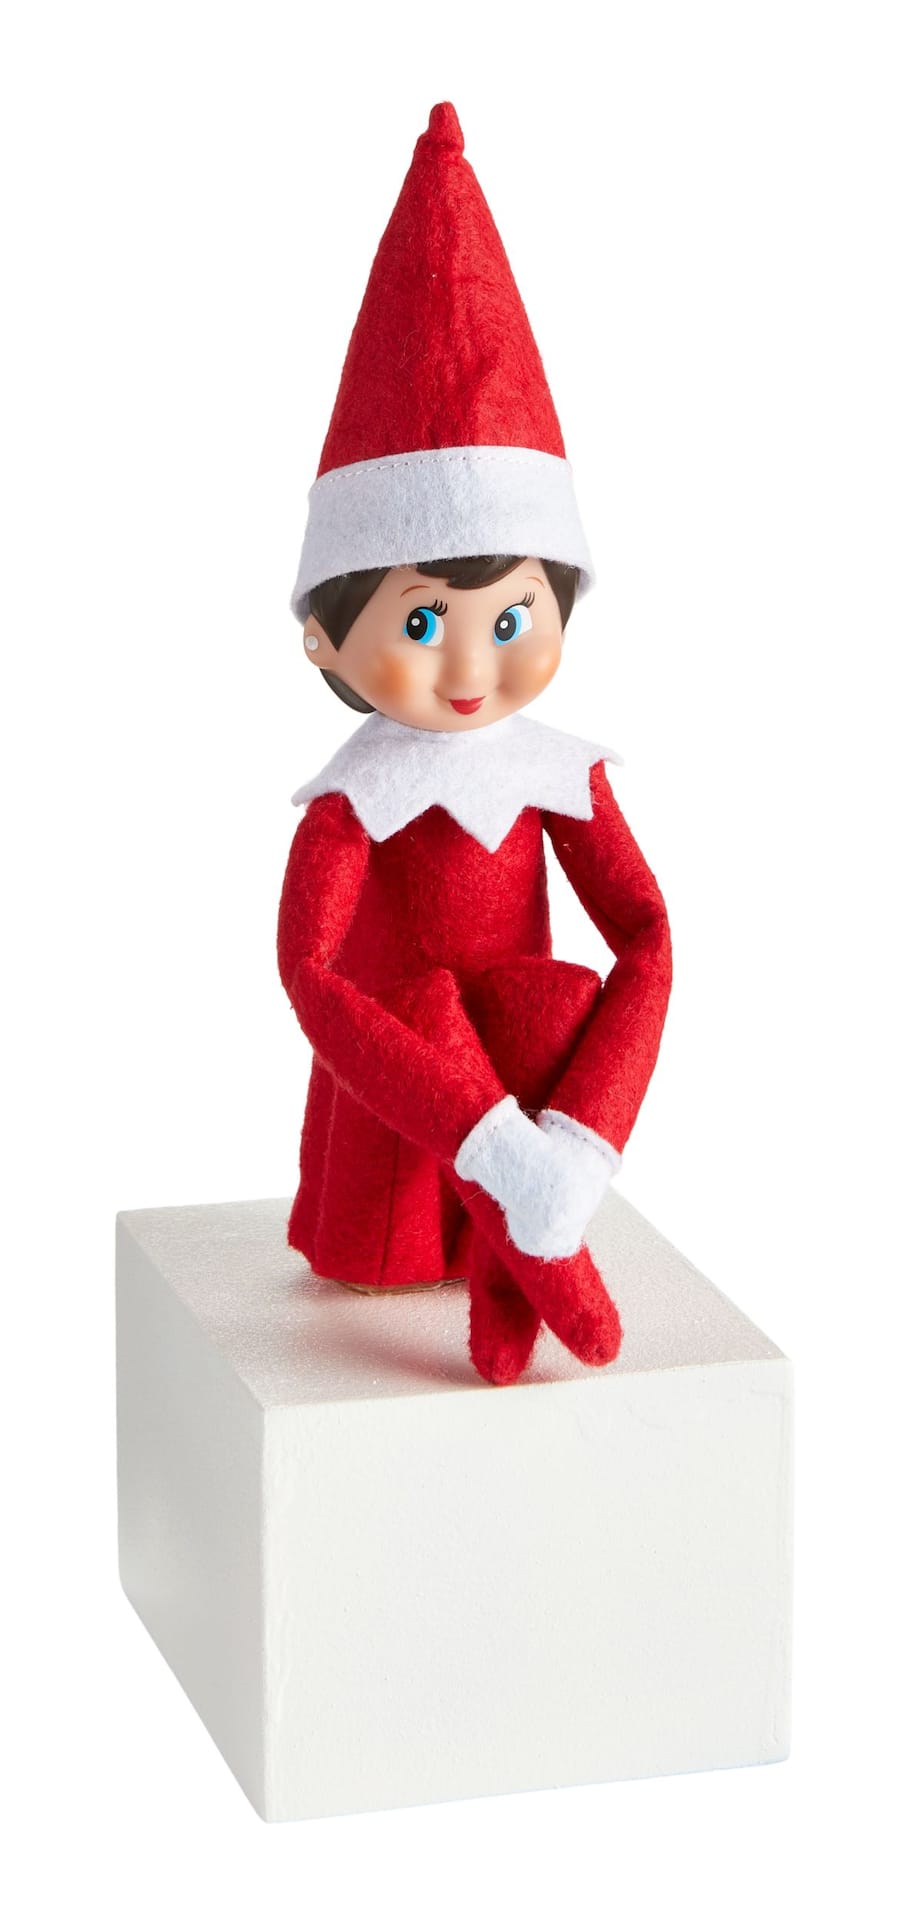 The Elf on the Shelf®: A Christmas Tradition - Light Skin Girl Elf